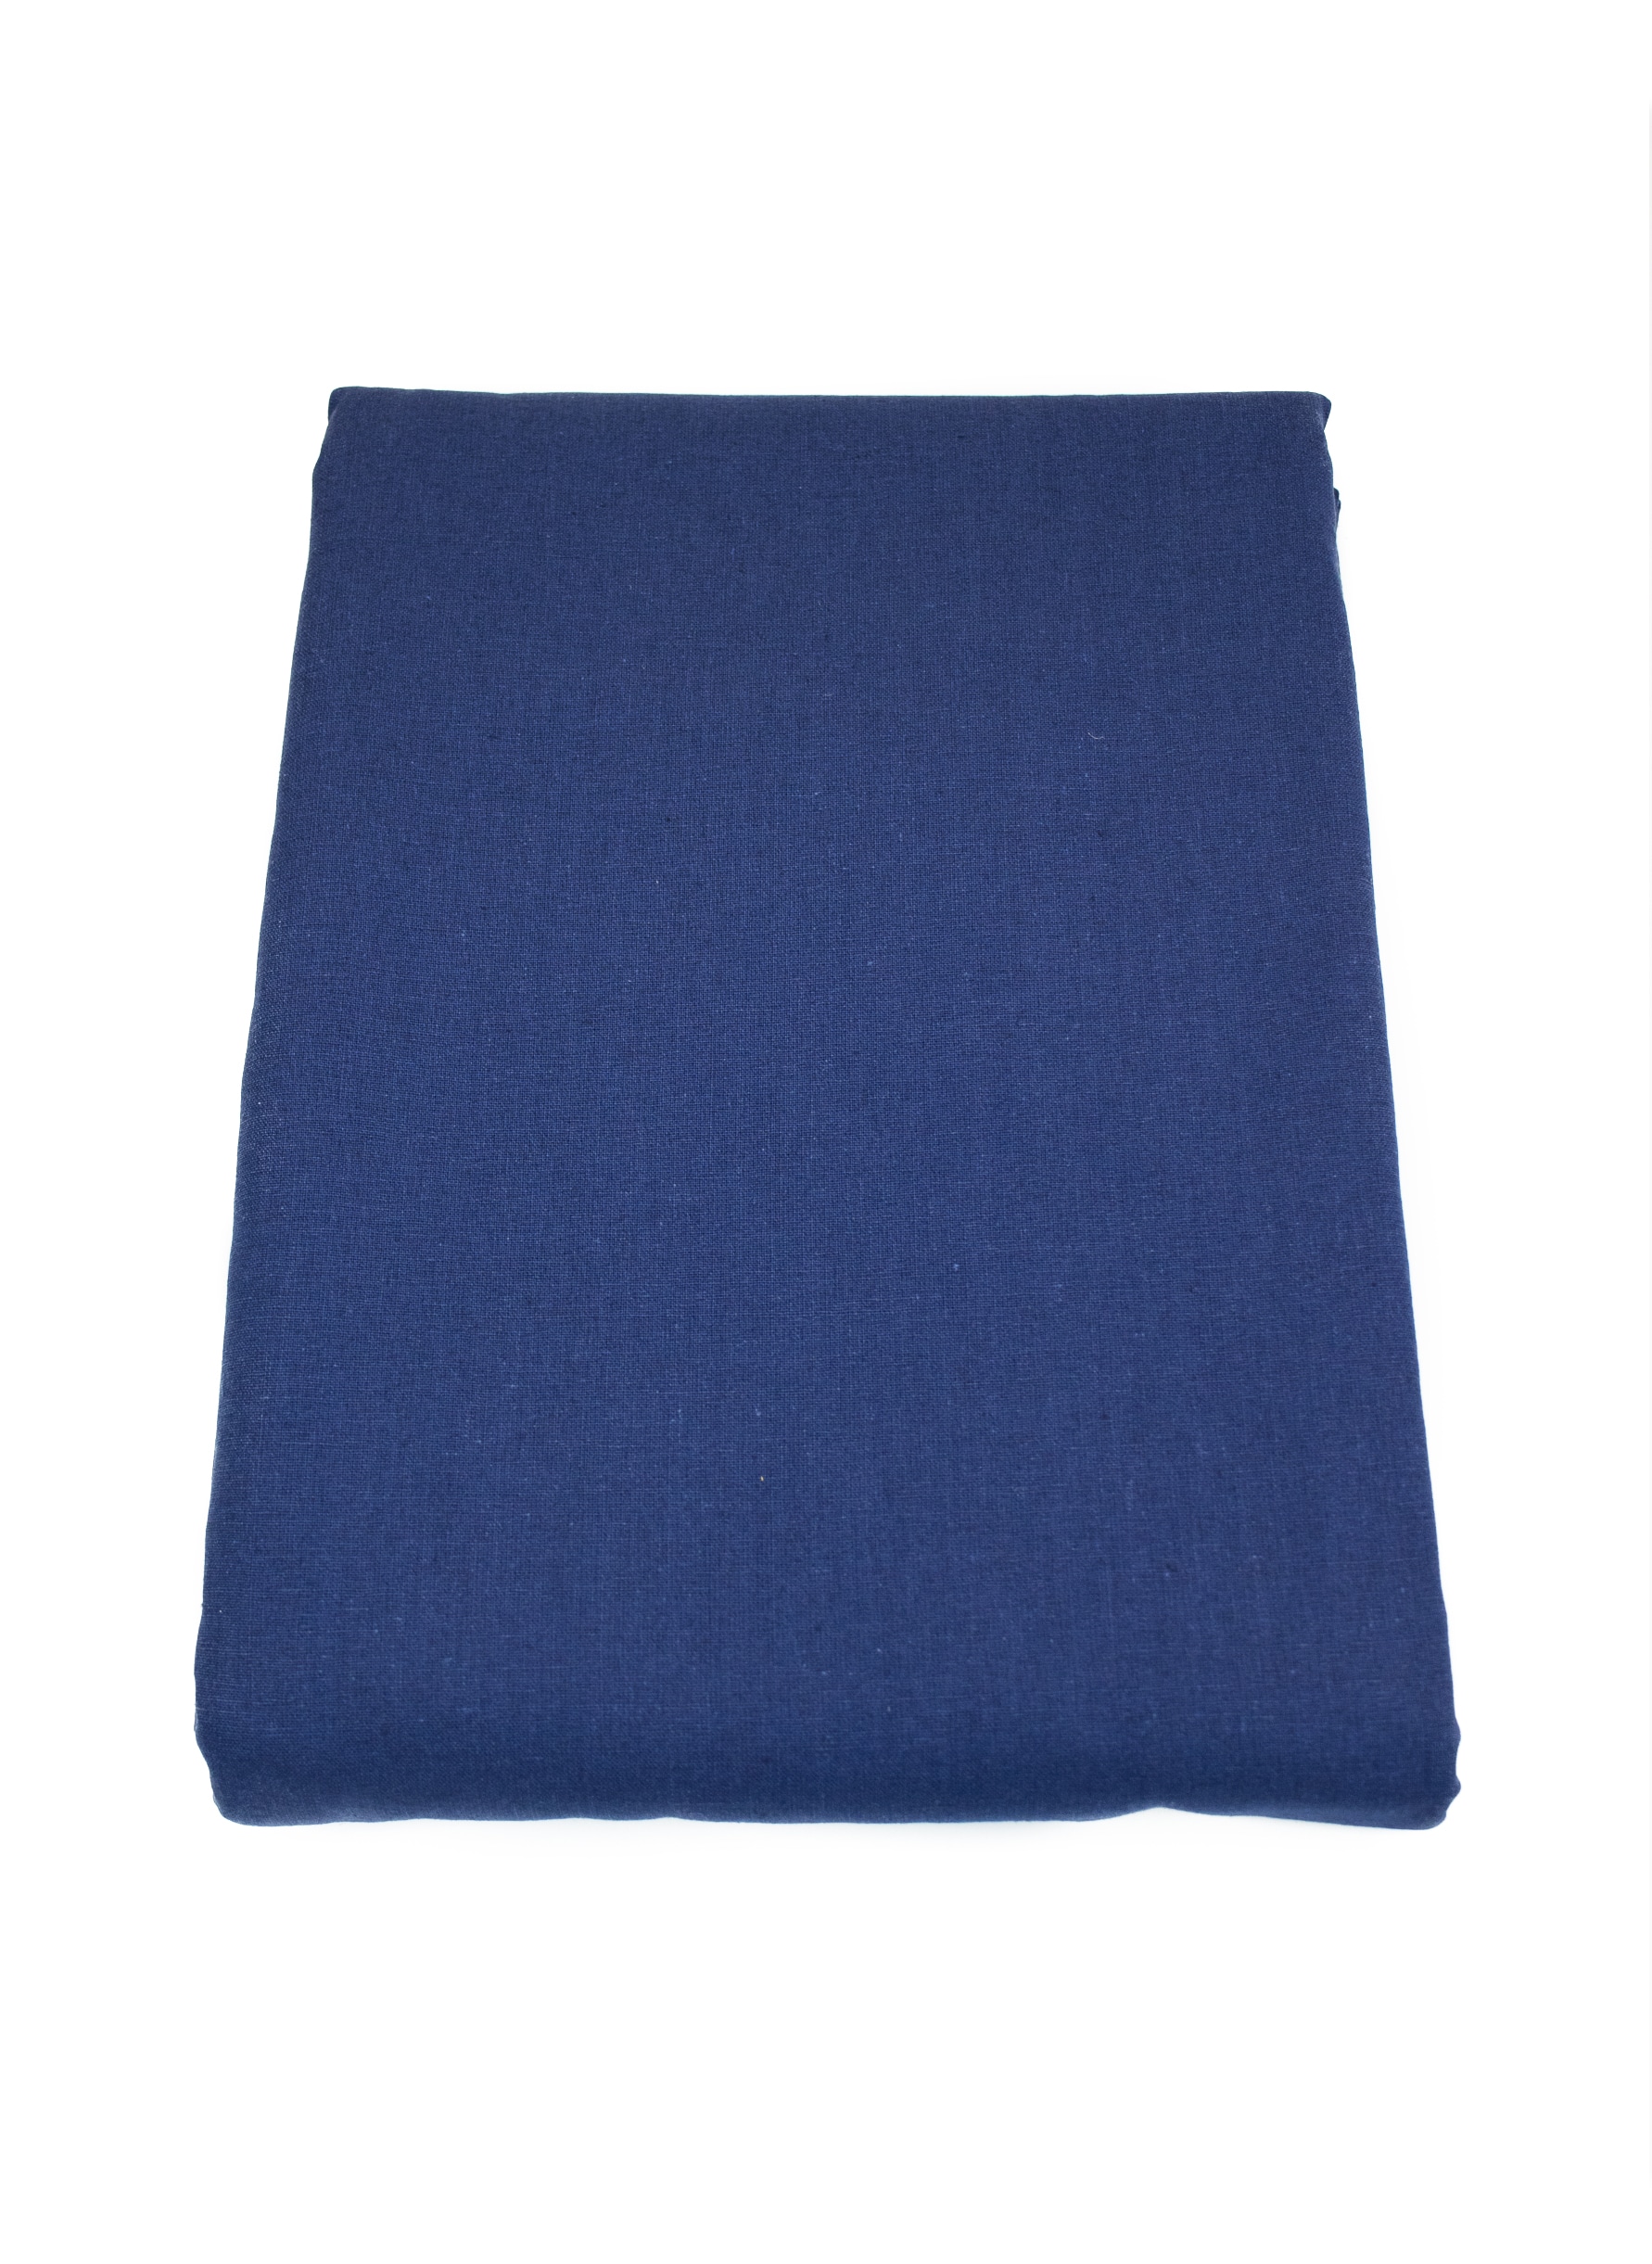 Silk sheets navy blue